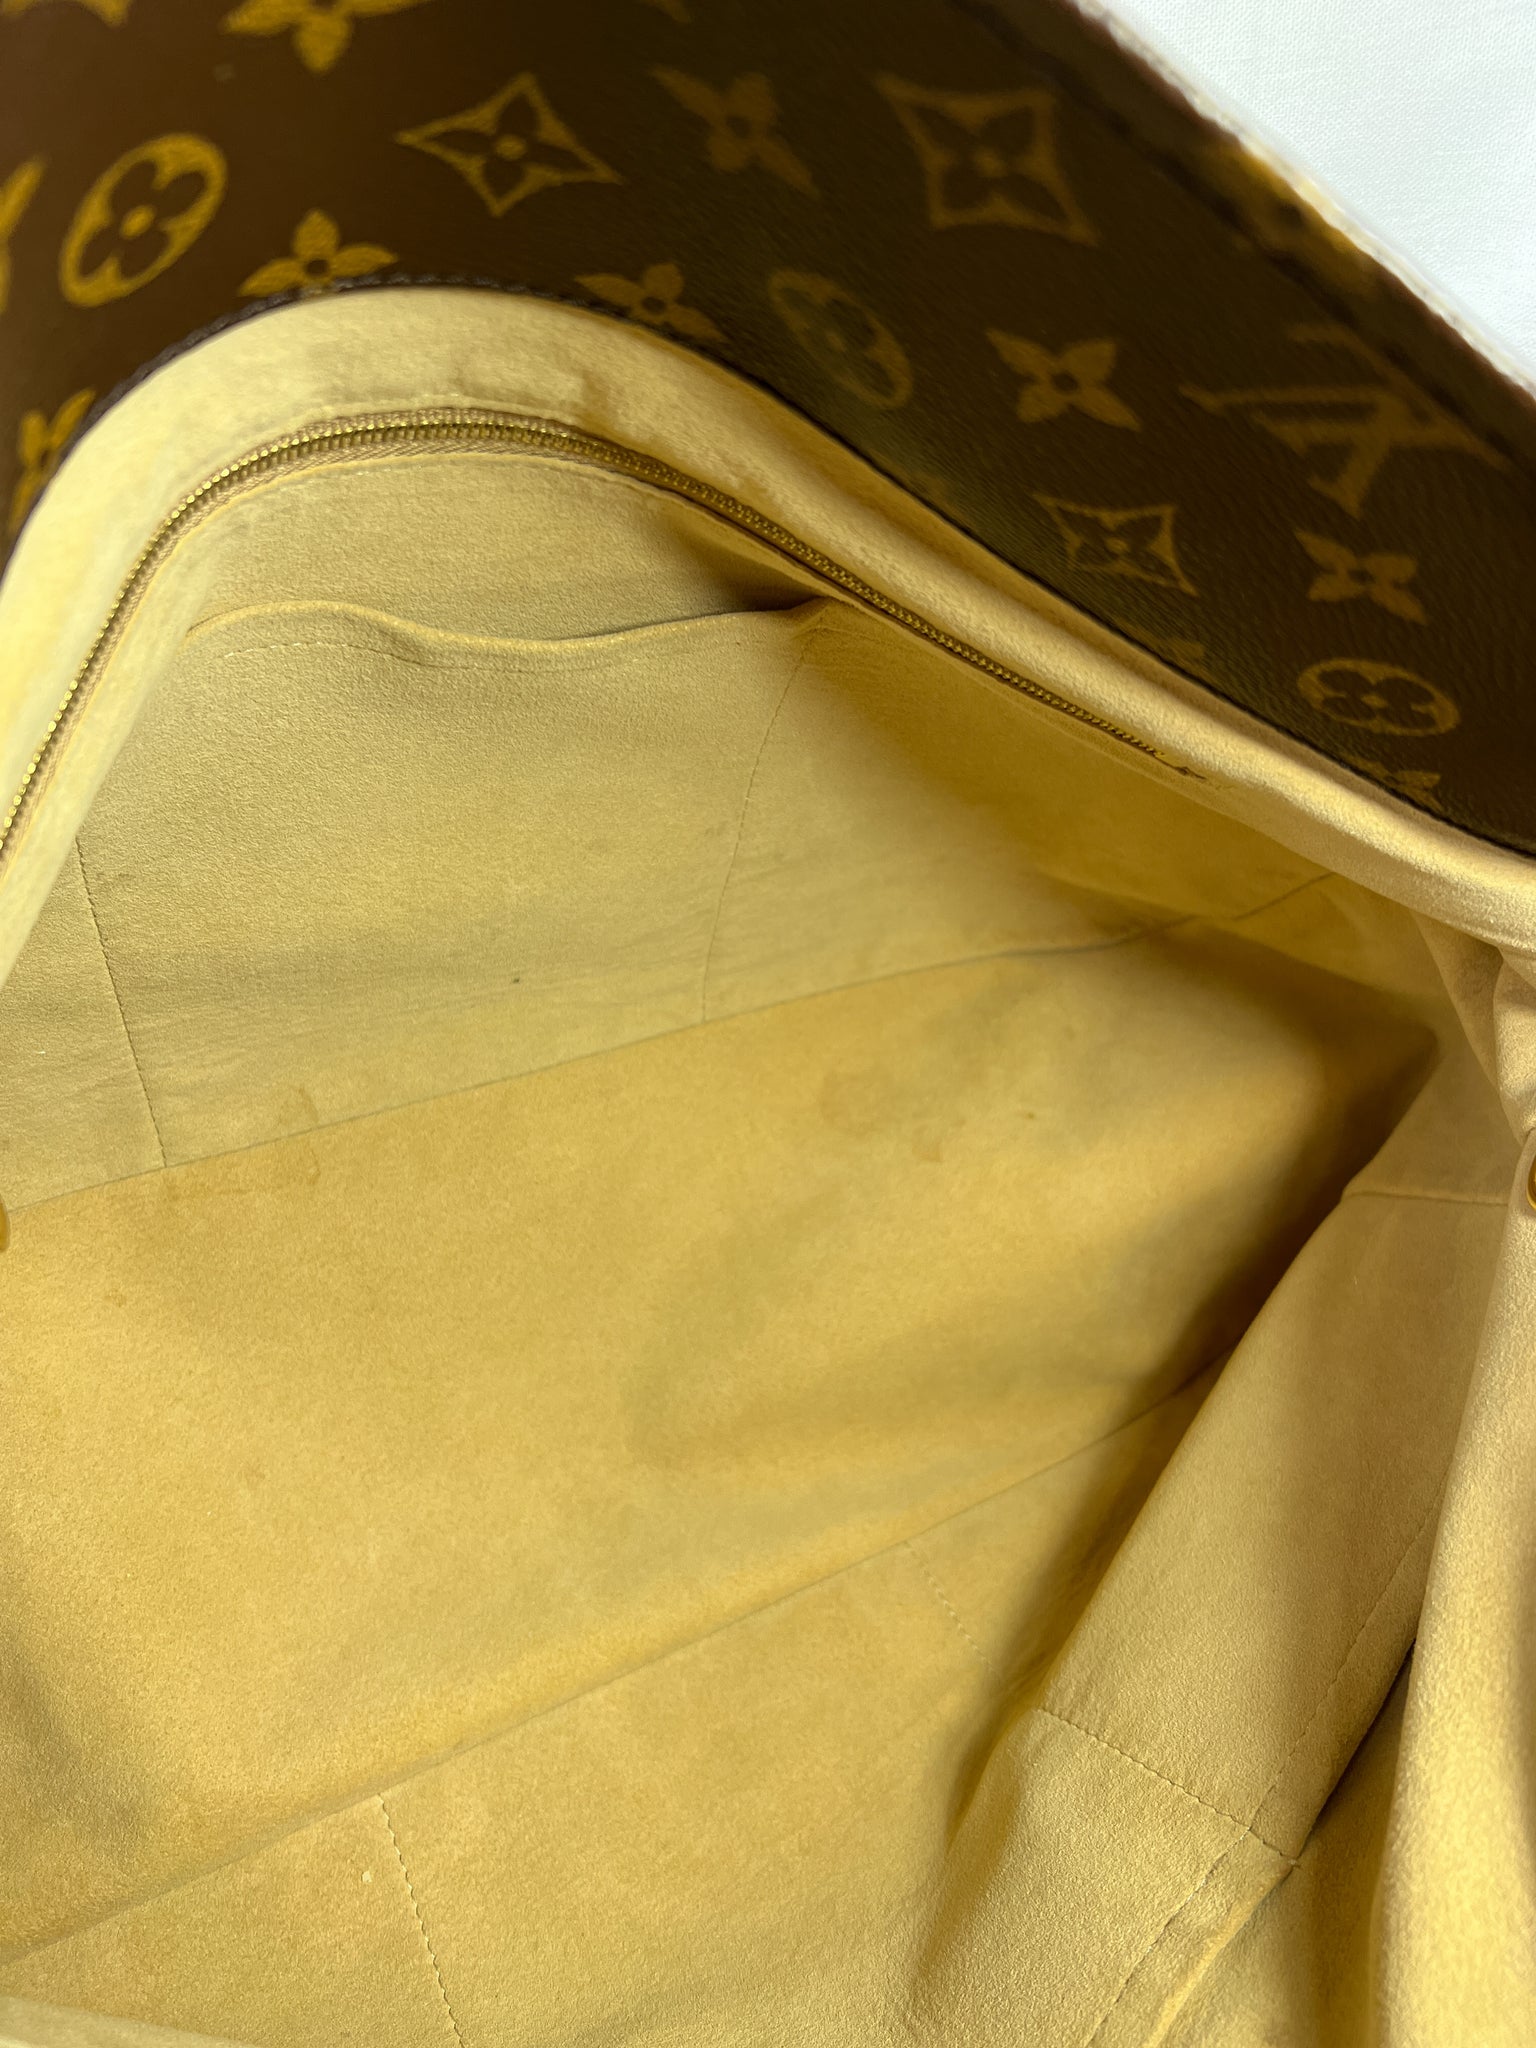 Louis Vuitton monogram Artsy shoulder bag – My Girlfriend's